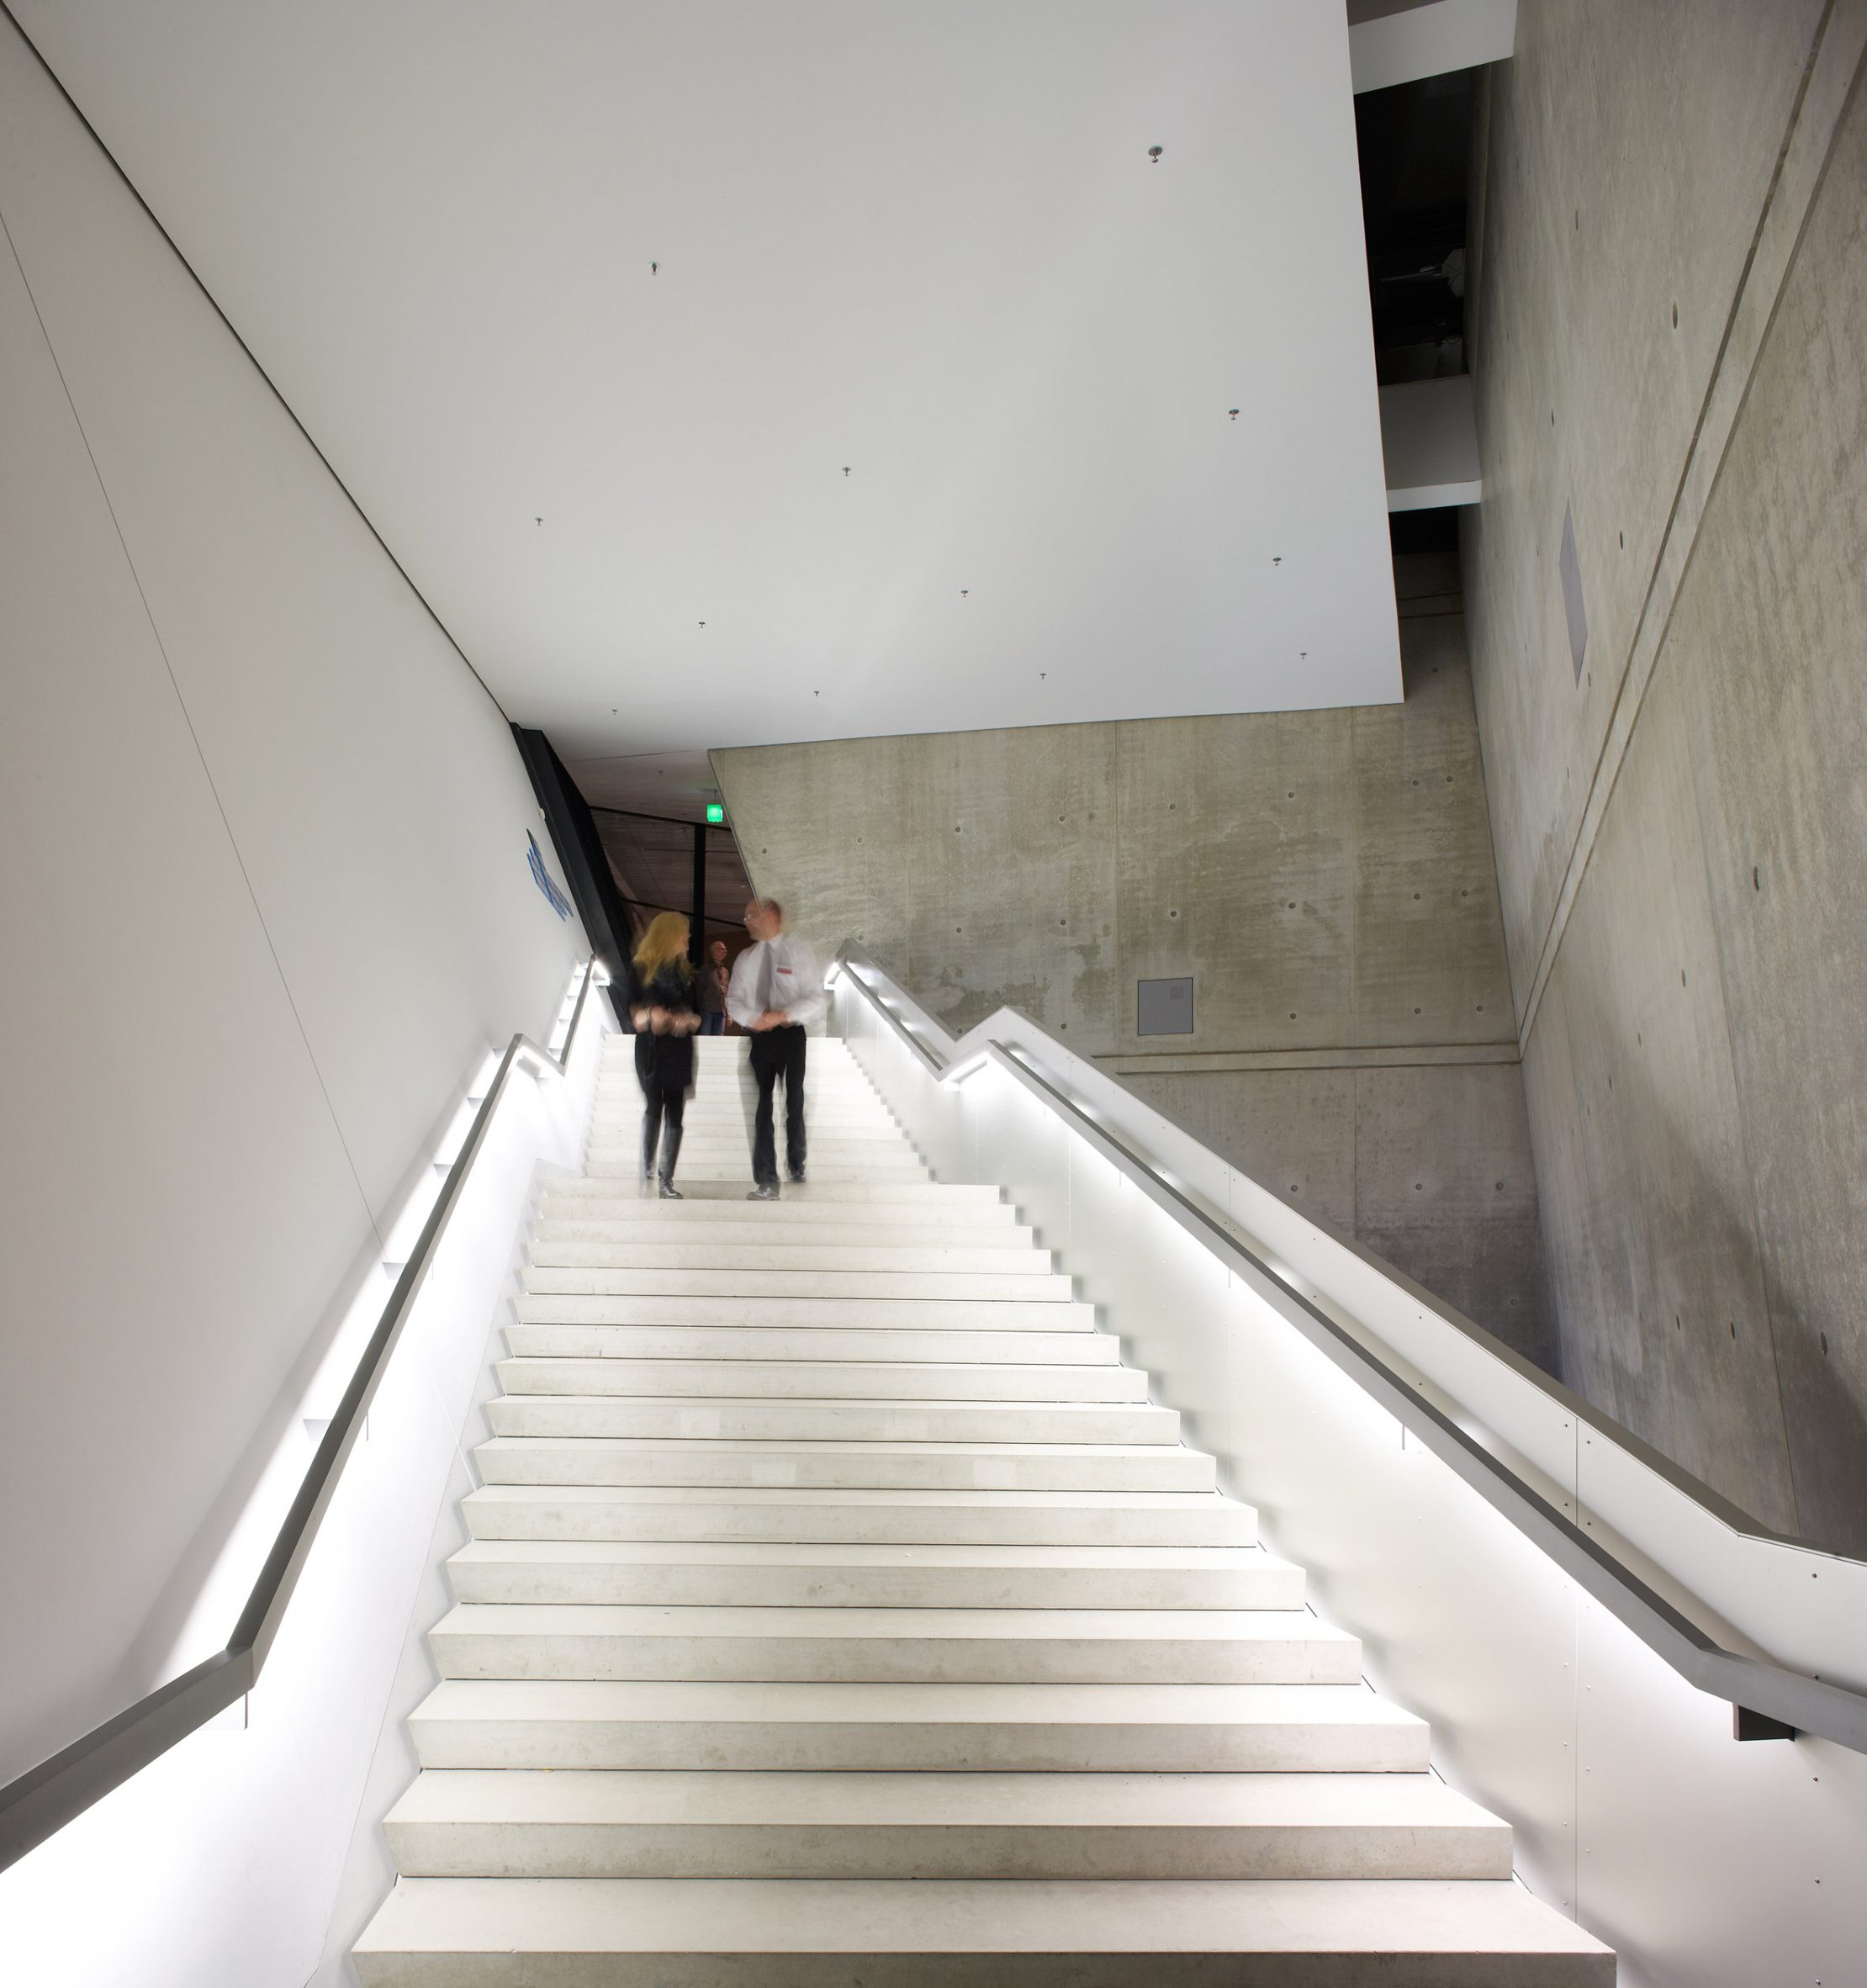 Museum circulation by Daniel Libeskind